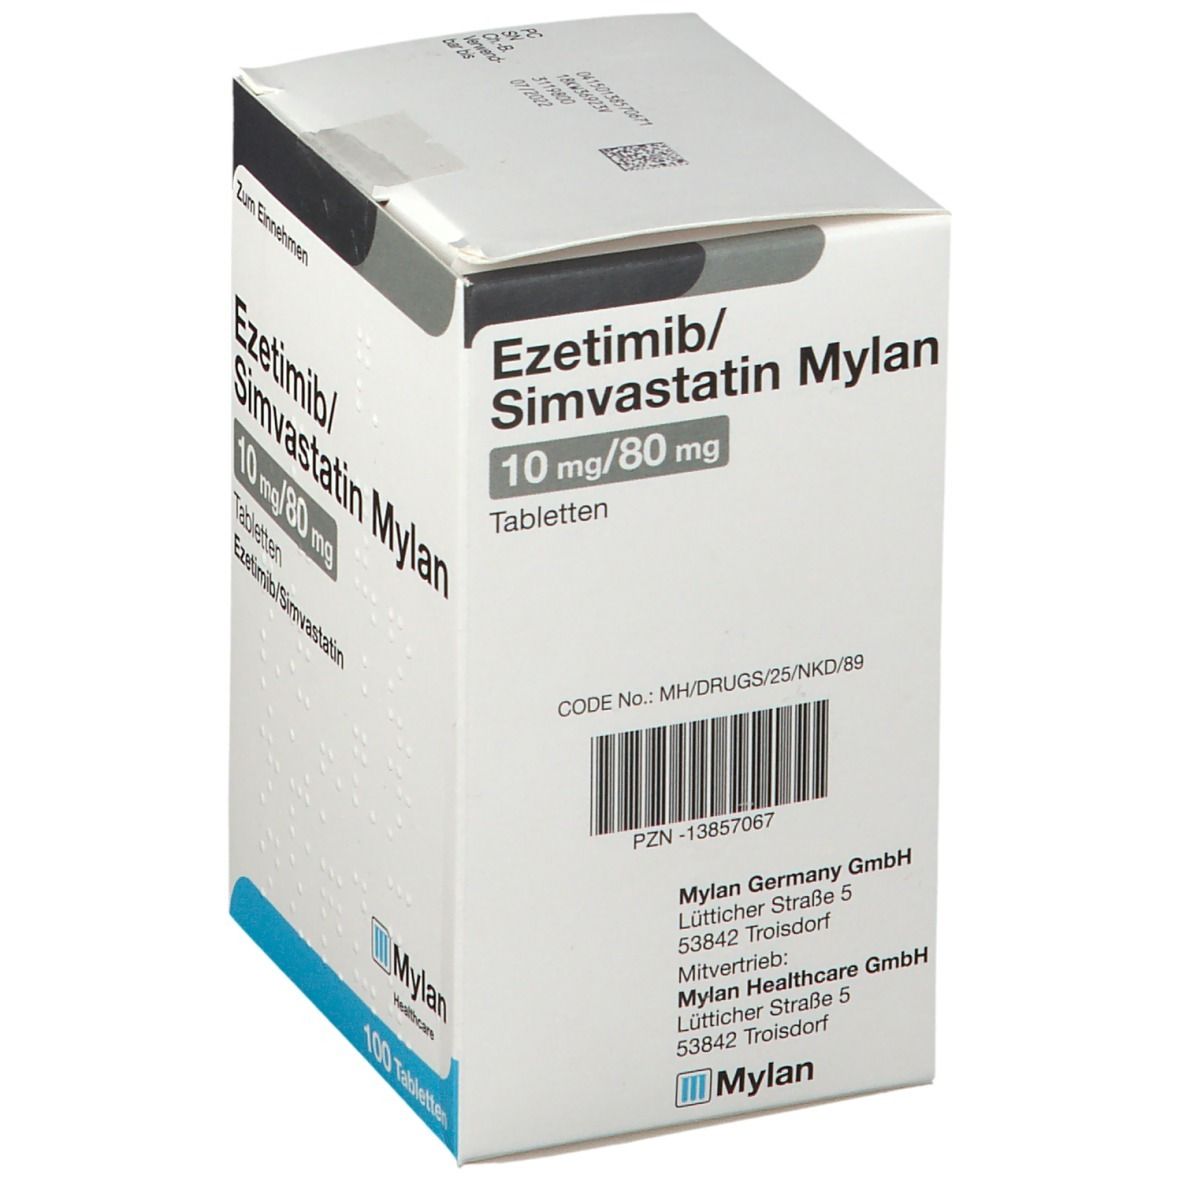 Ezetimib/Simvastatin Mylan 10 mg/80 mg